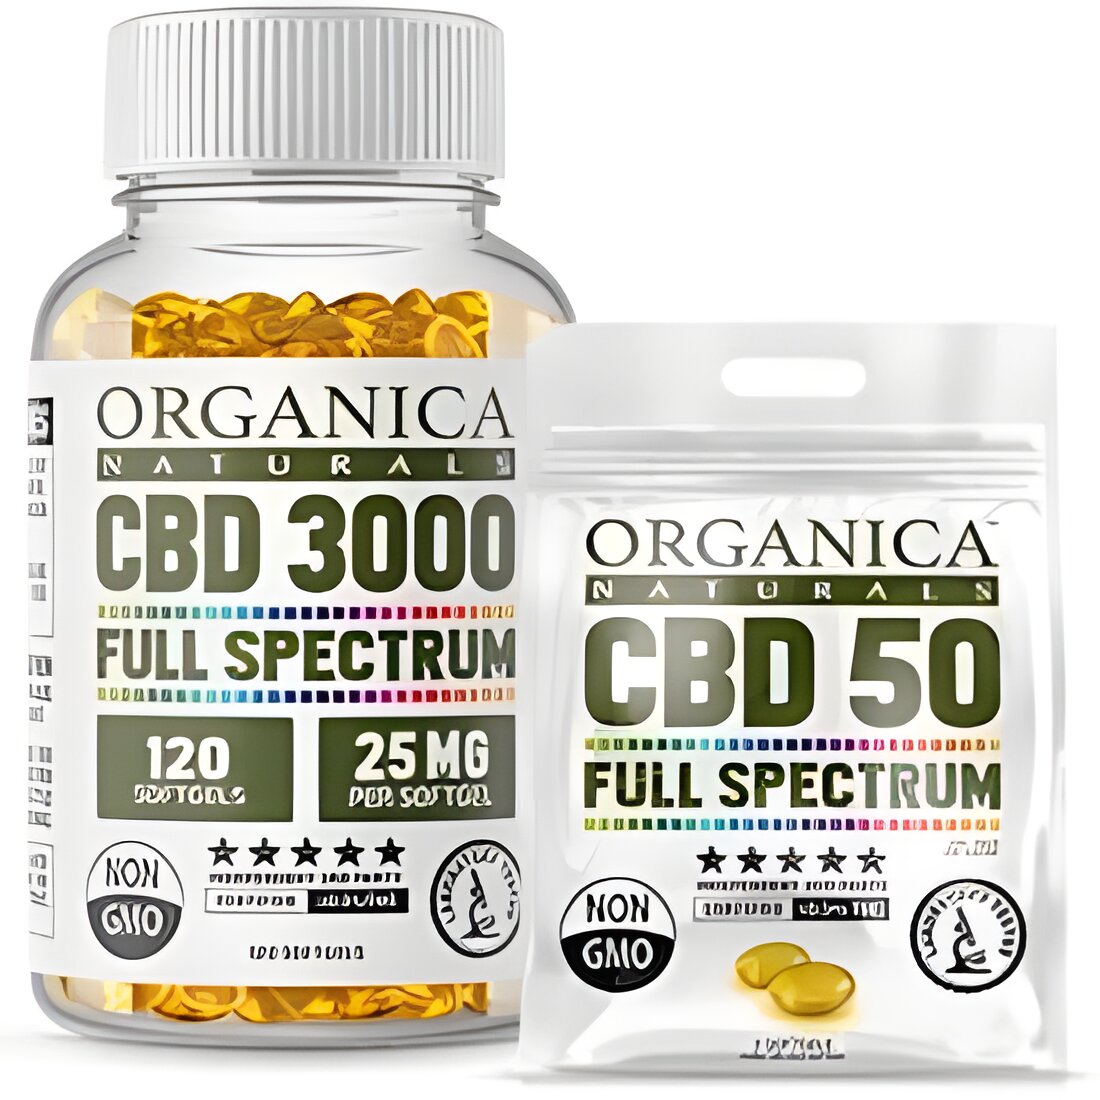 Free Organica Naturals CBD SoftGel Capsules